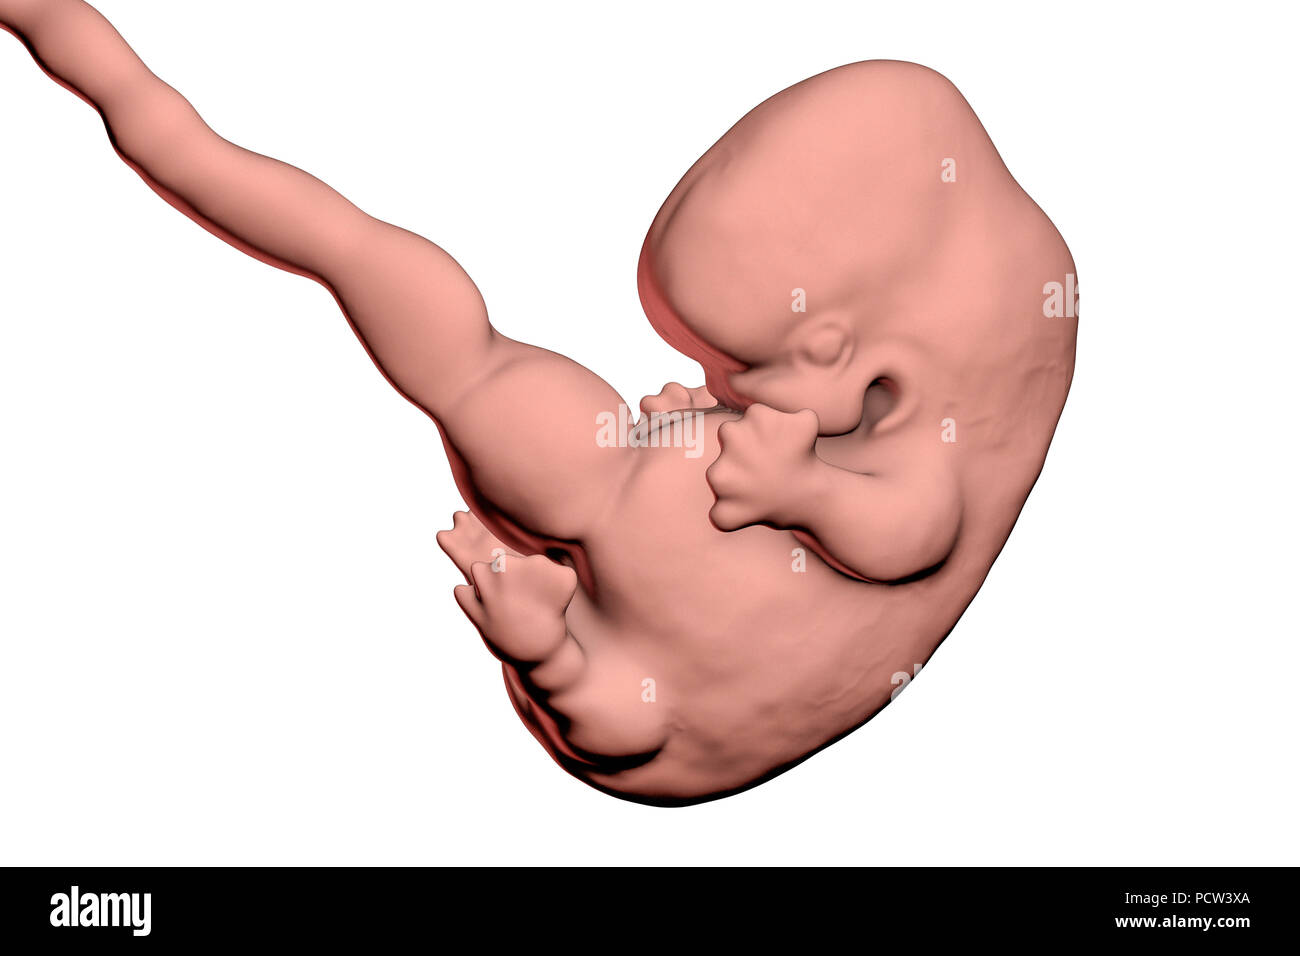 Human embryo, age 7 weeks, computer illustration. Stock Photo